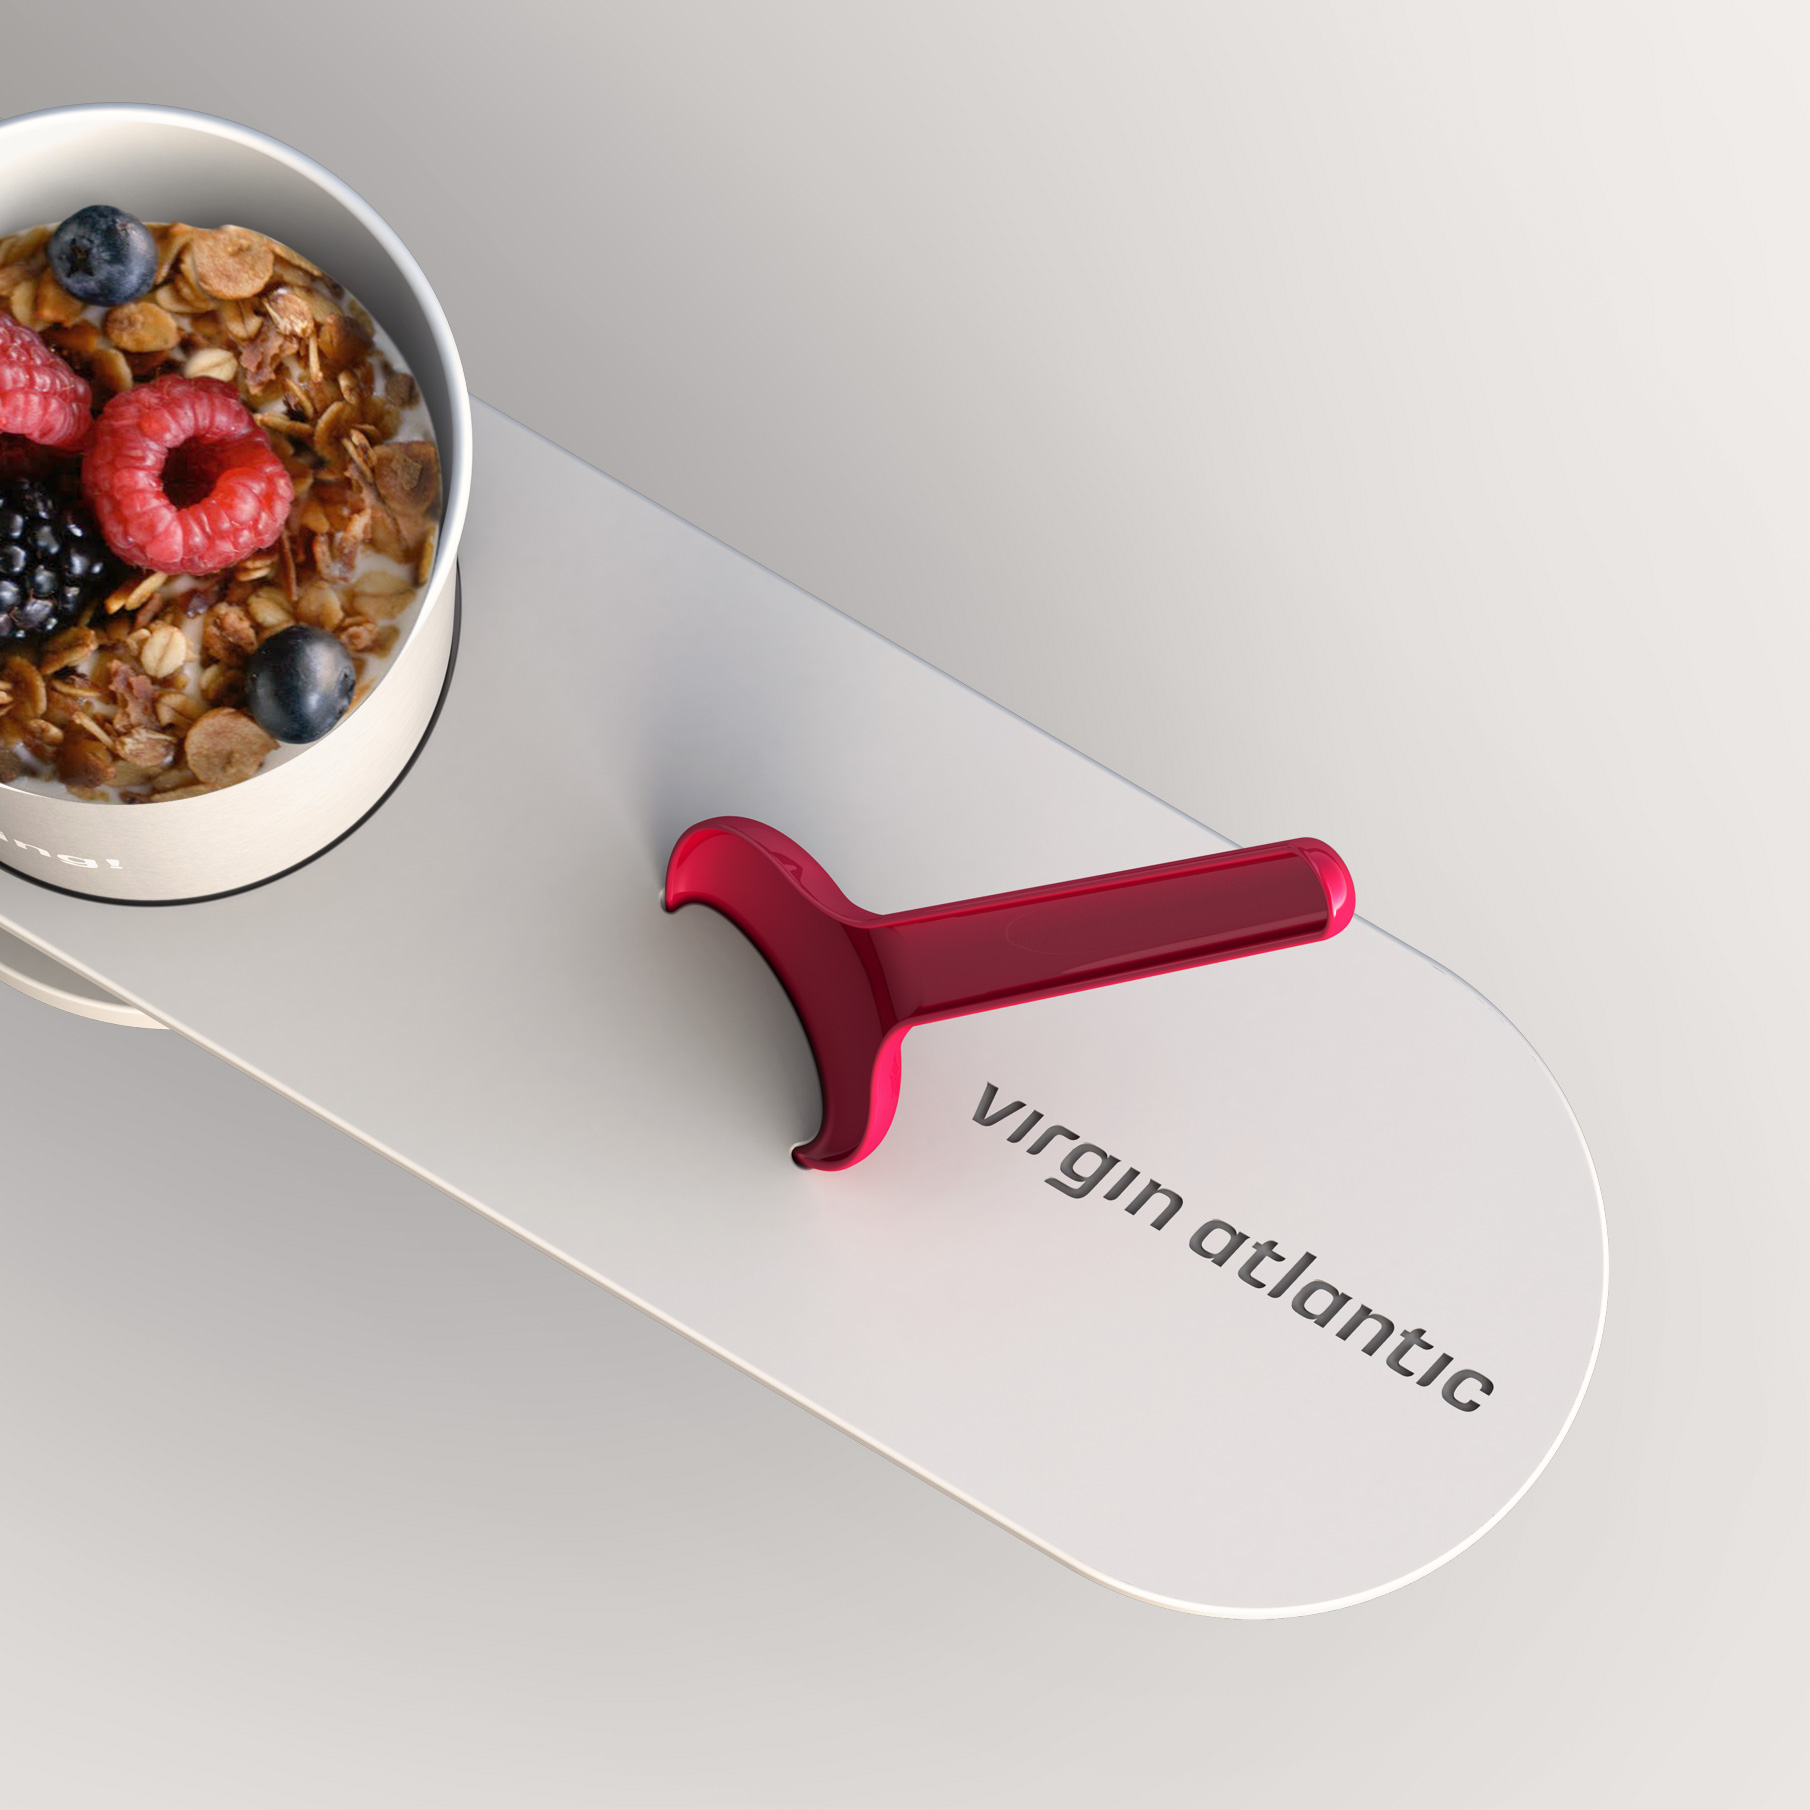 Virgin Atlantic Meal Service | Breakfast | Granola | Top View